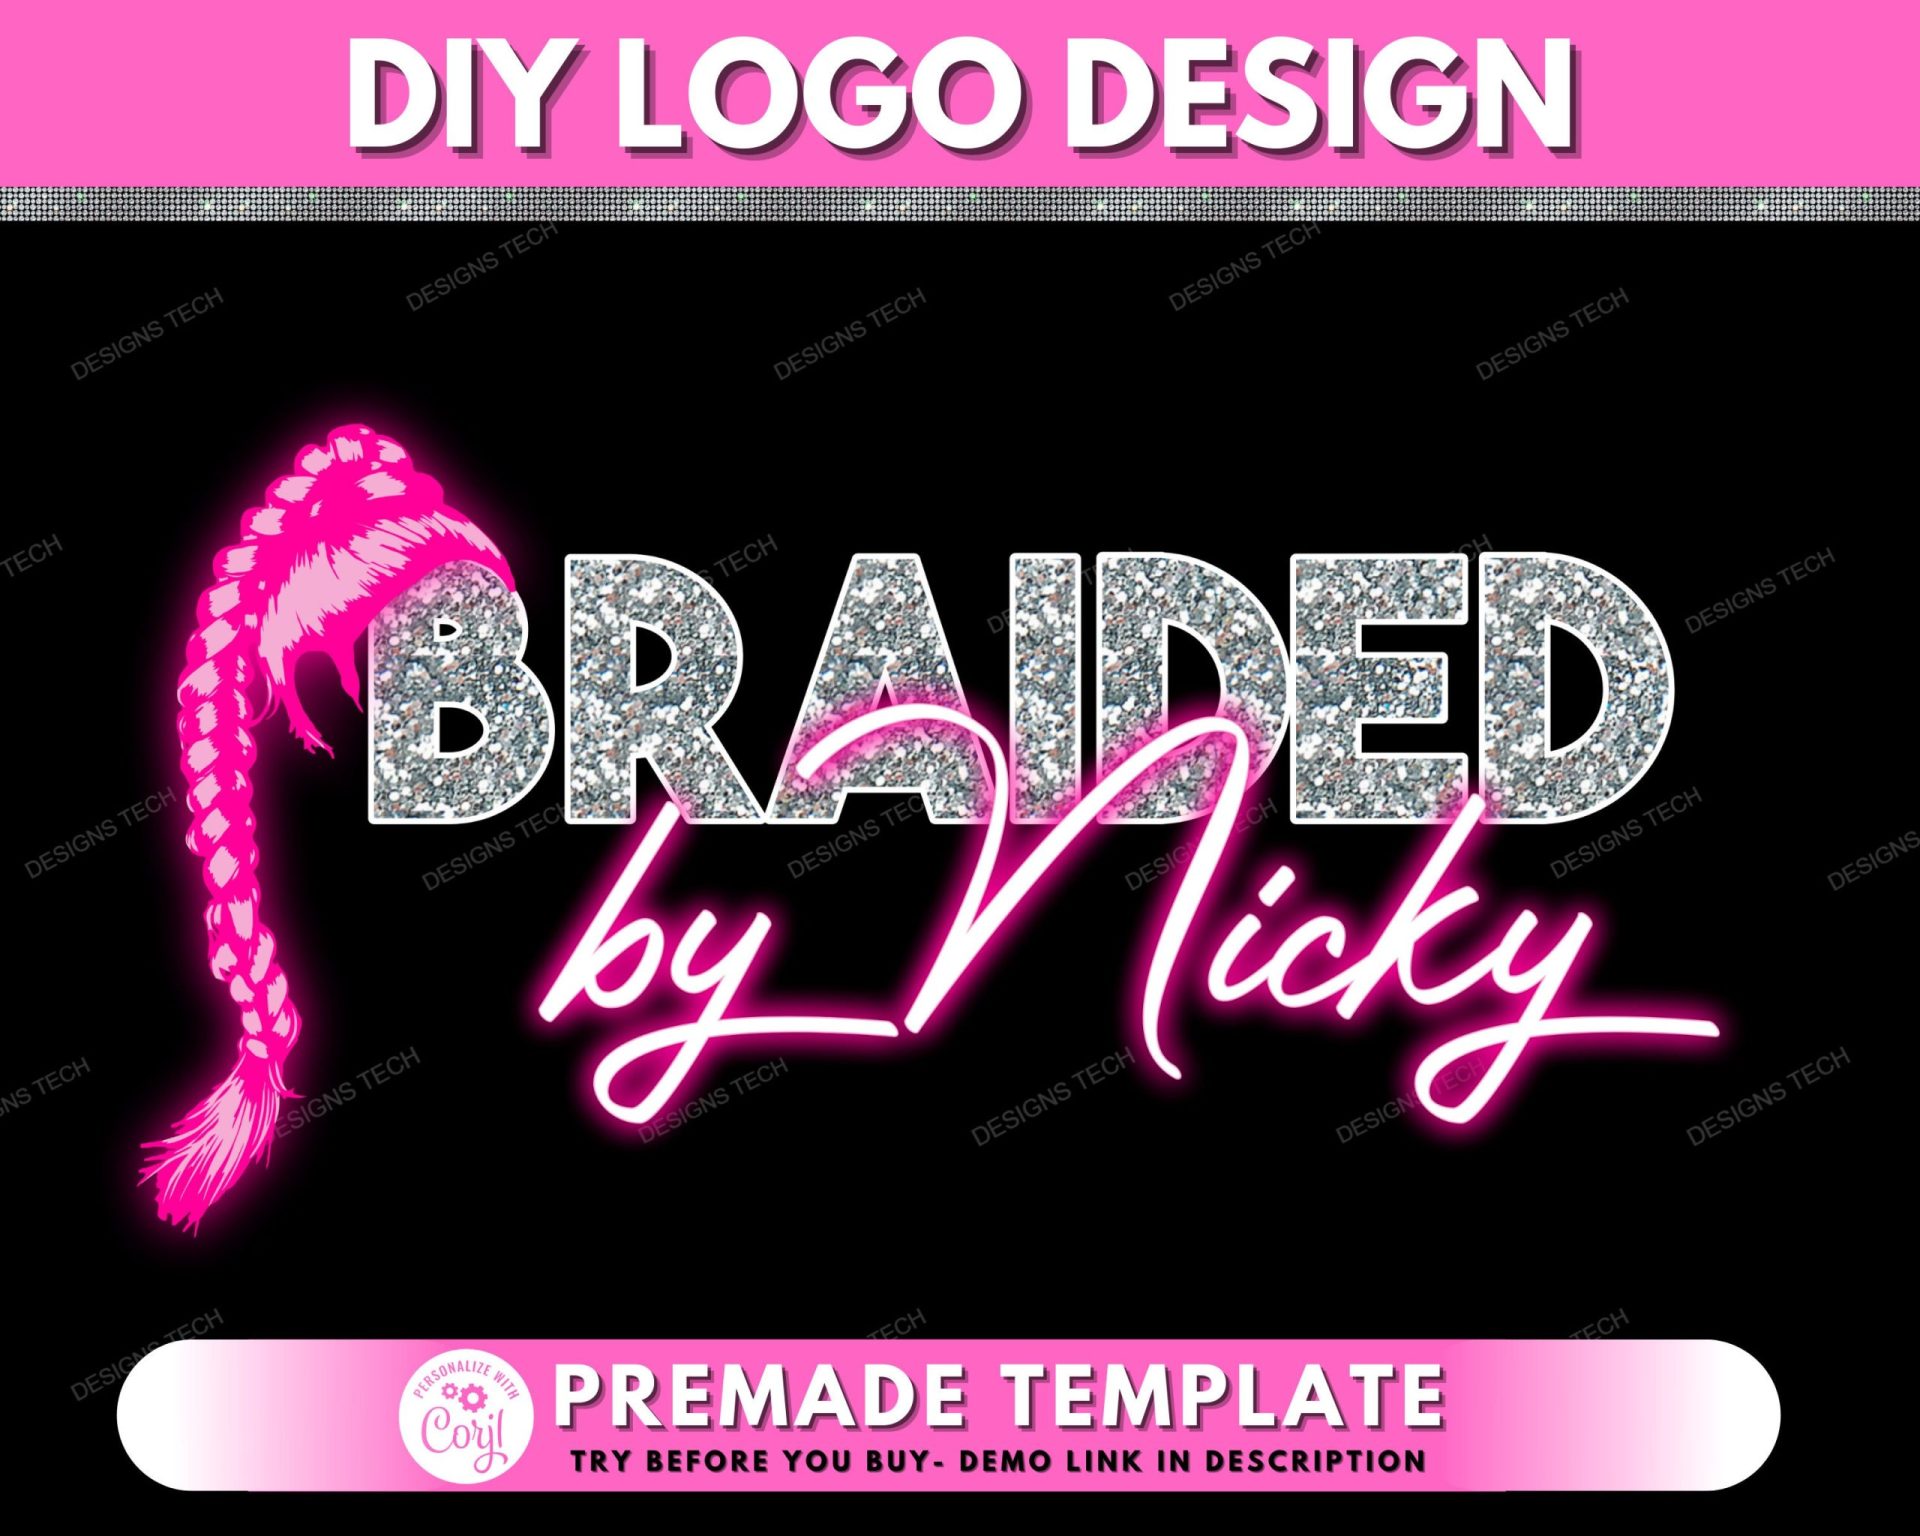 braiding logo ideas 2